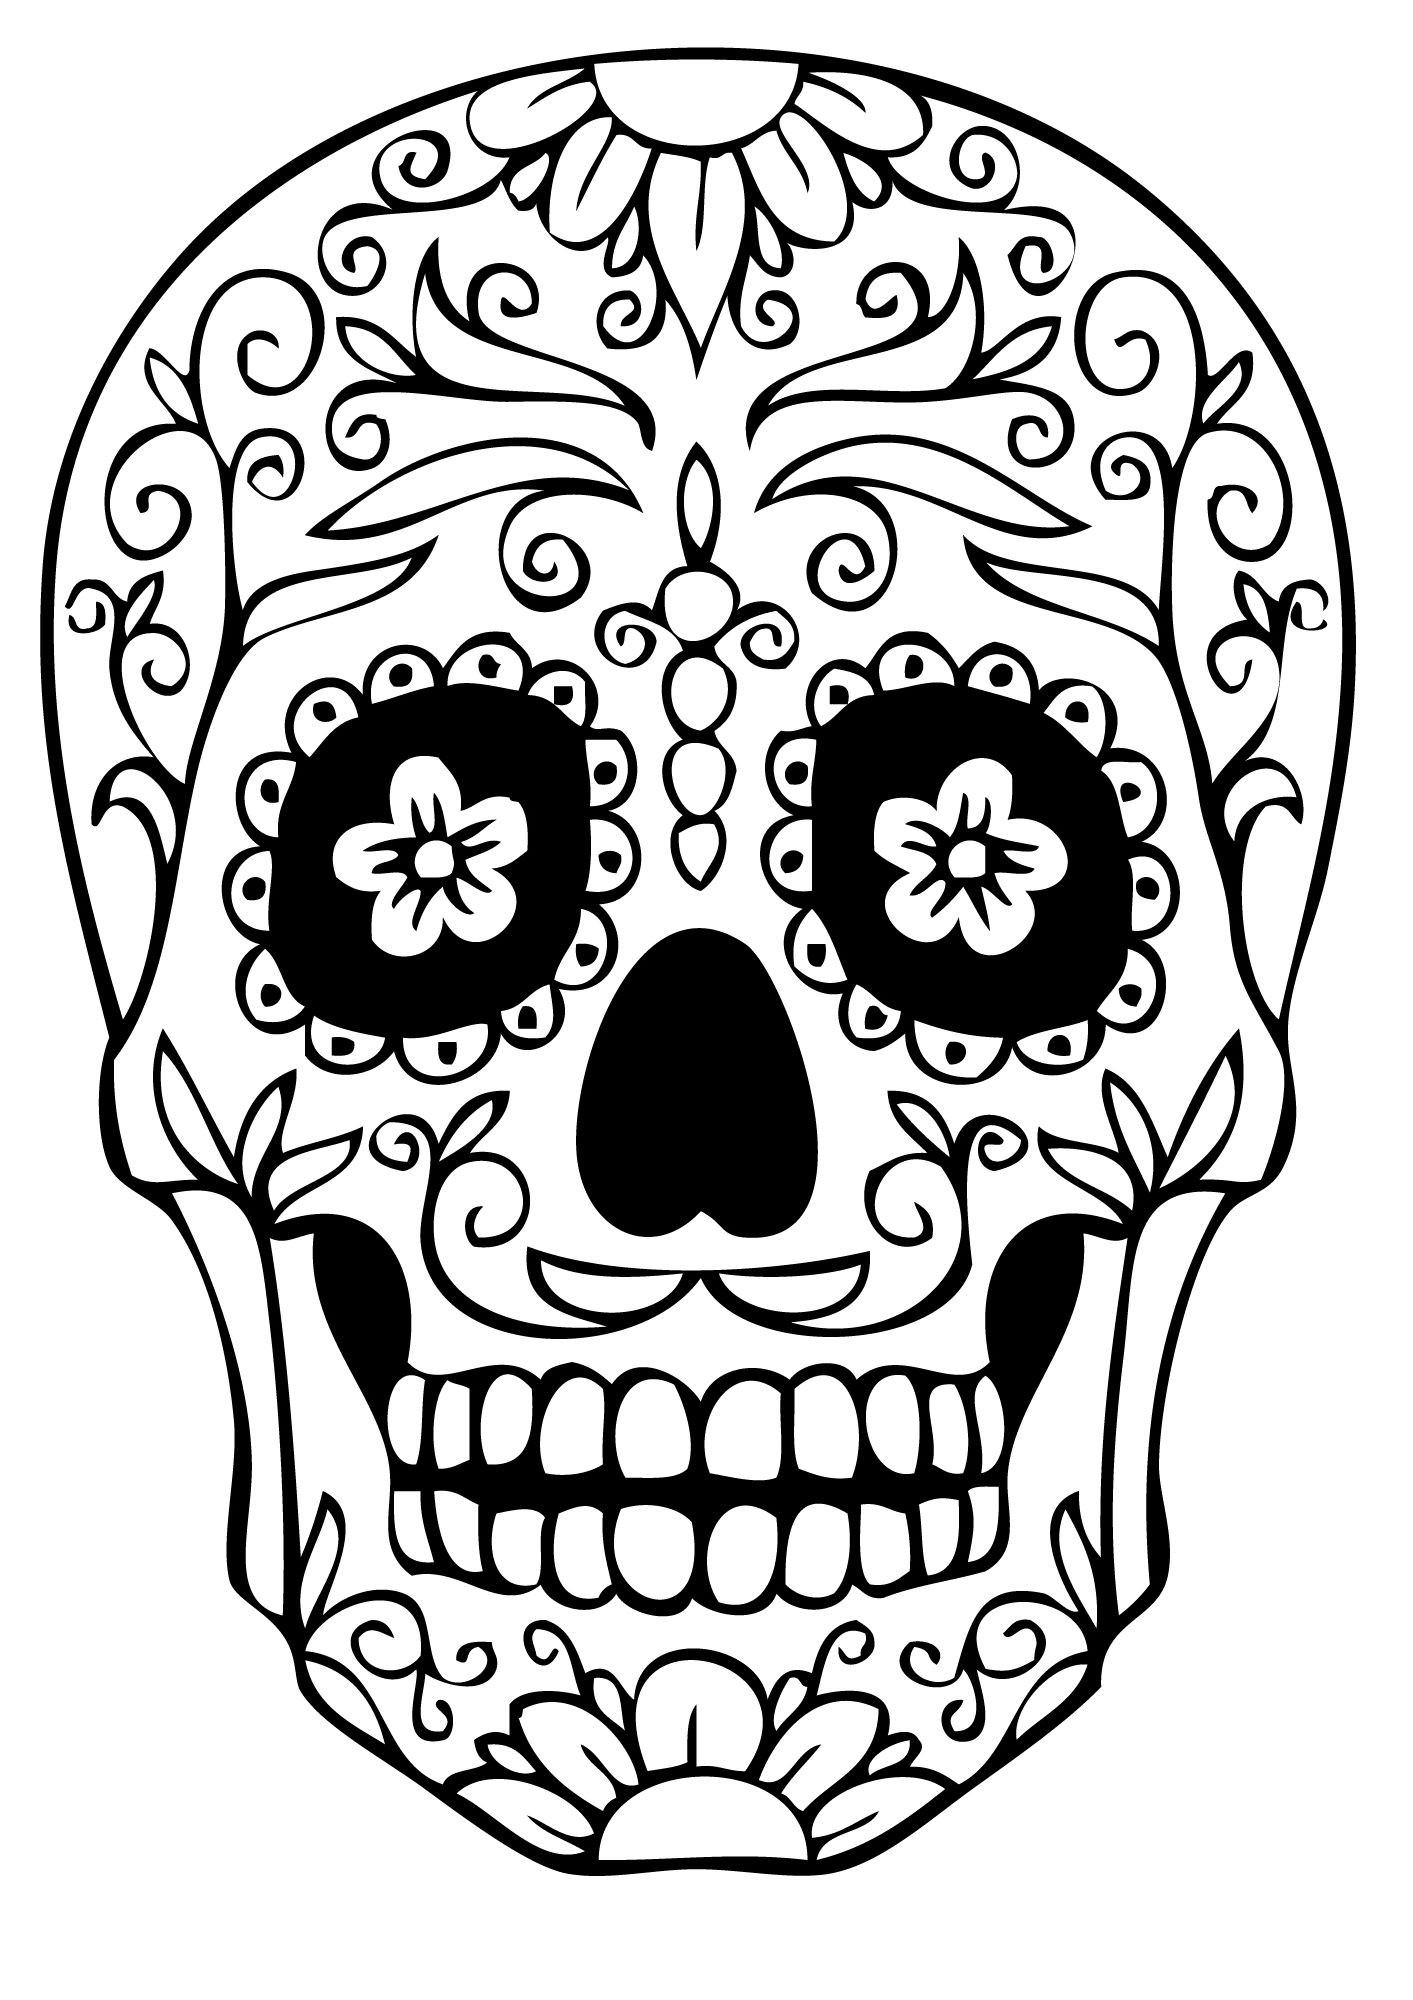 Printable Sugar Skull Coloring Pages
 Sugar Skull Coloring Pages Best Coloring Pages For Kids